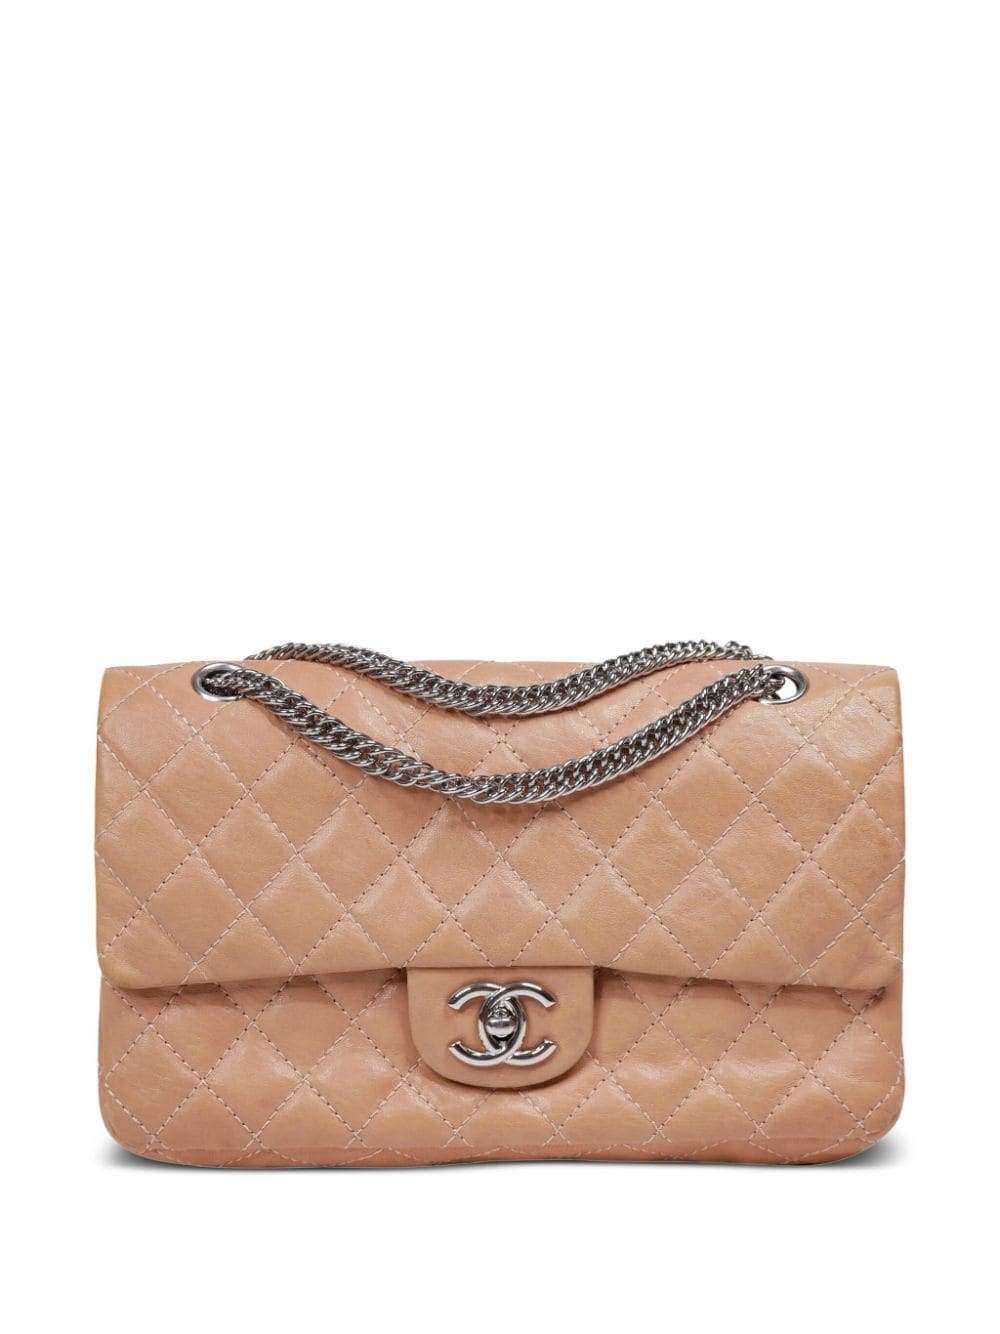 CHANEL, Bags, Chanel Sac Rabat Dark Great Medium Size